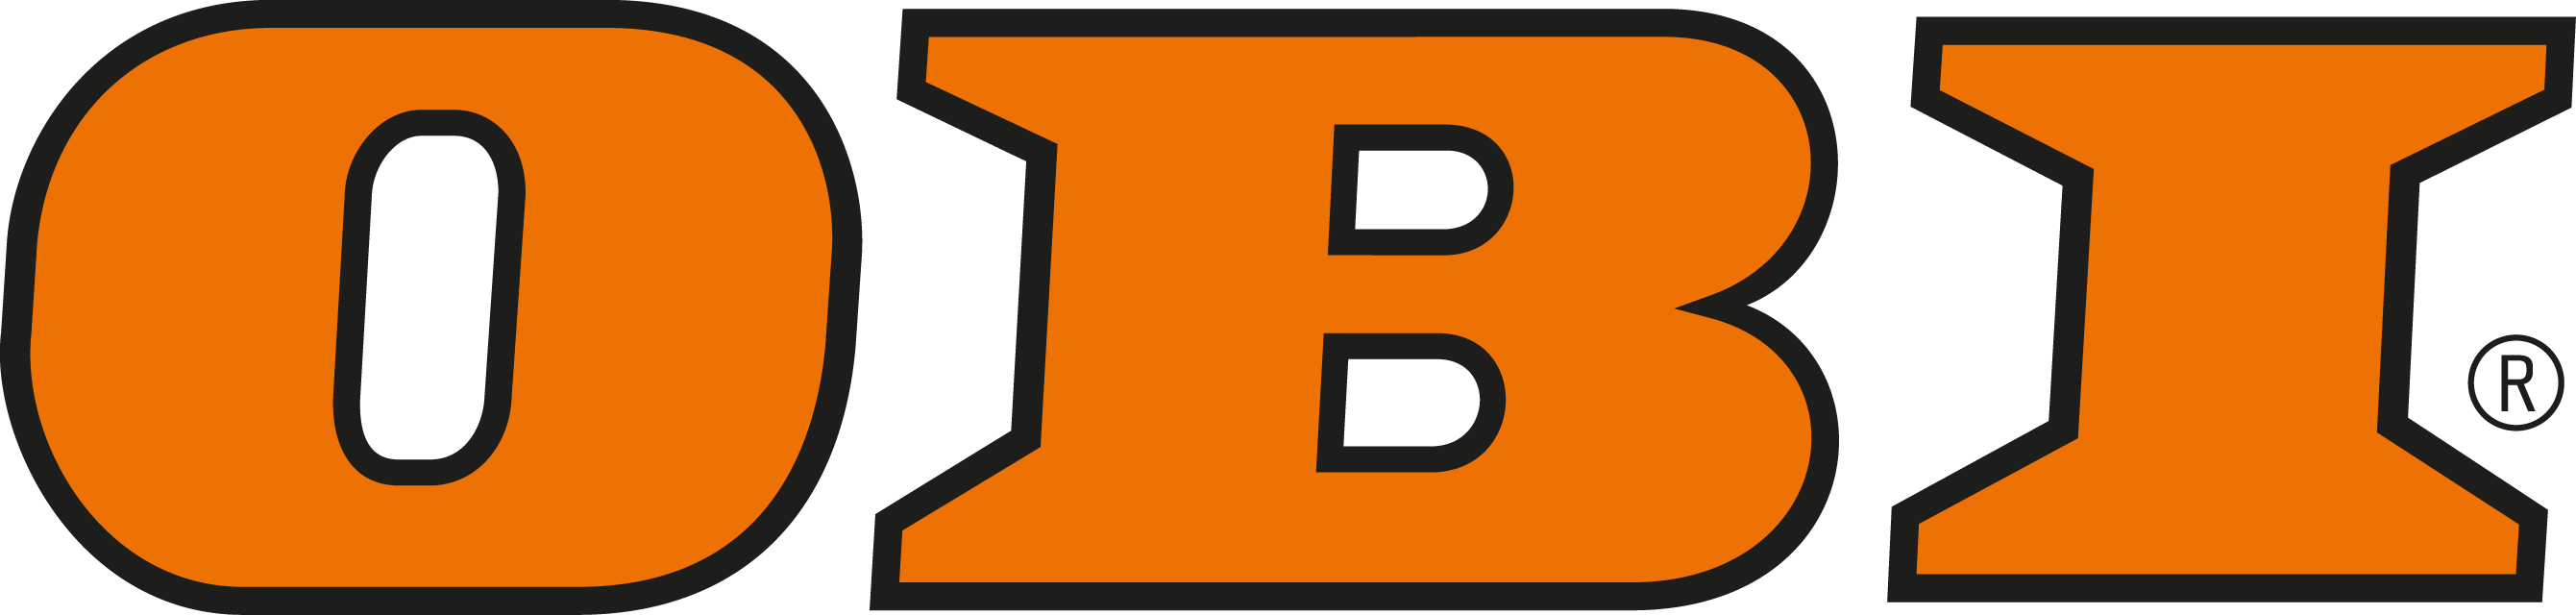 логотип партнёра Obi